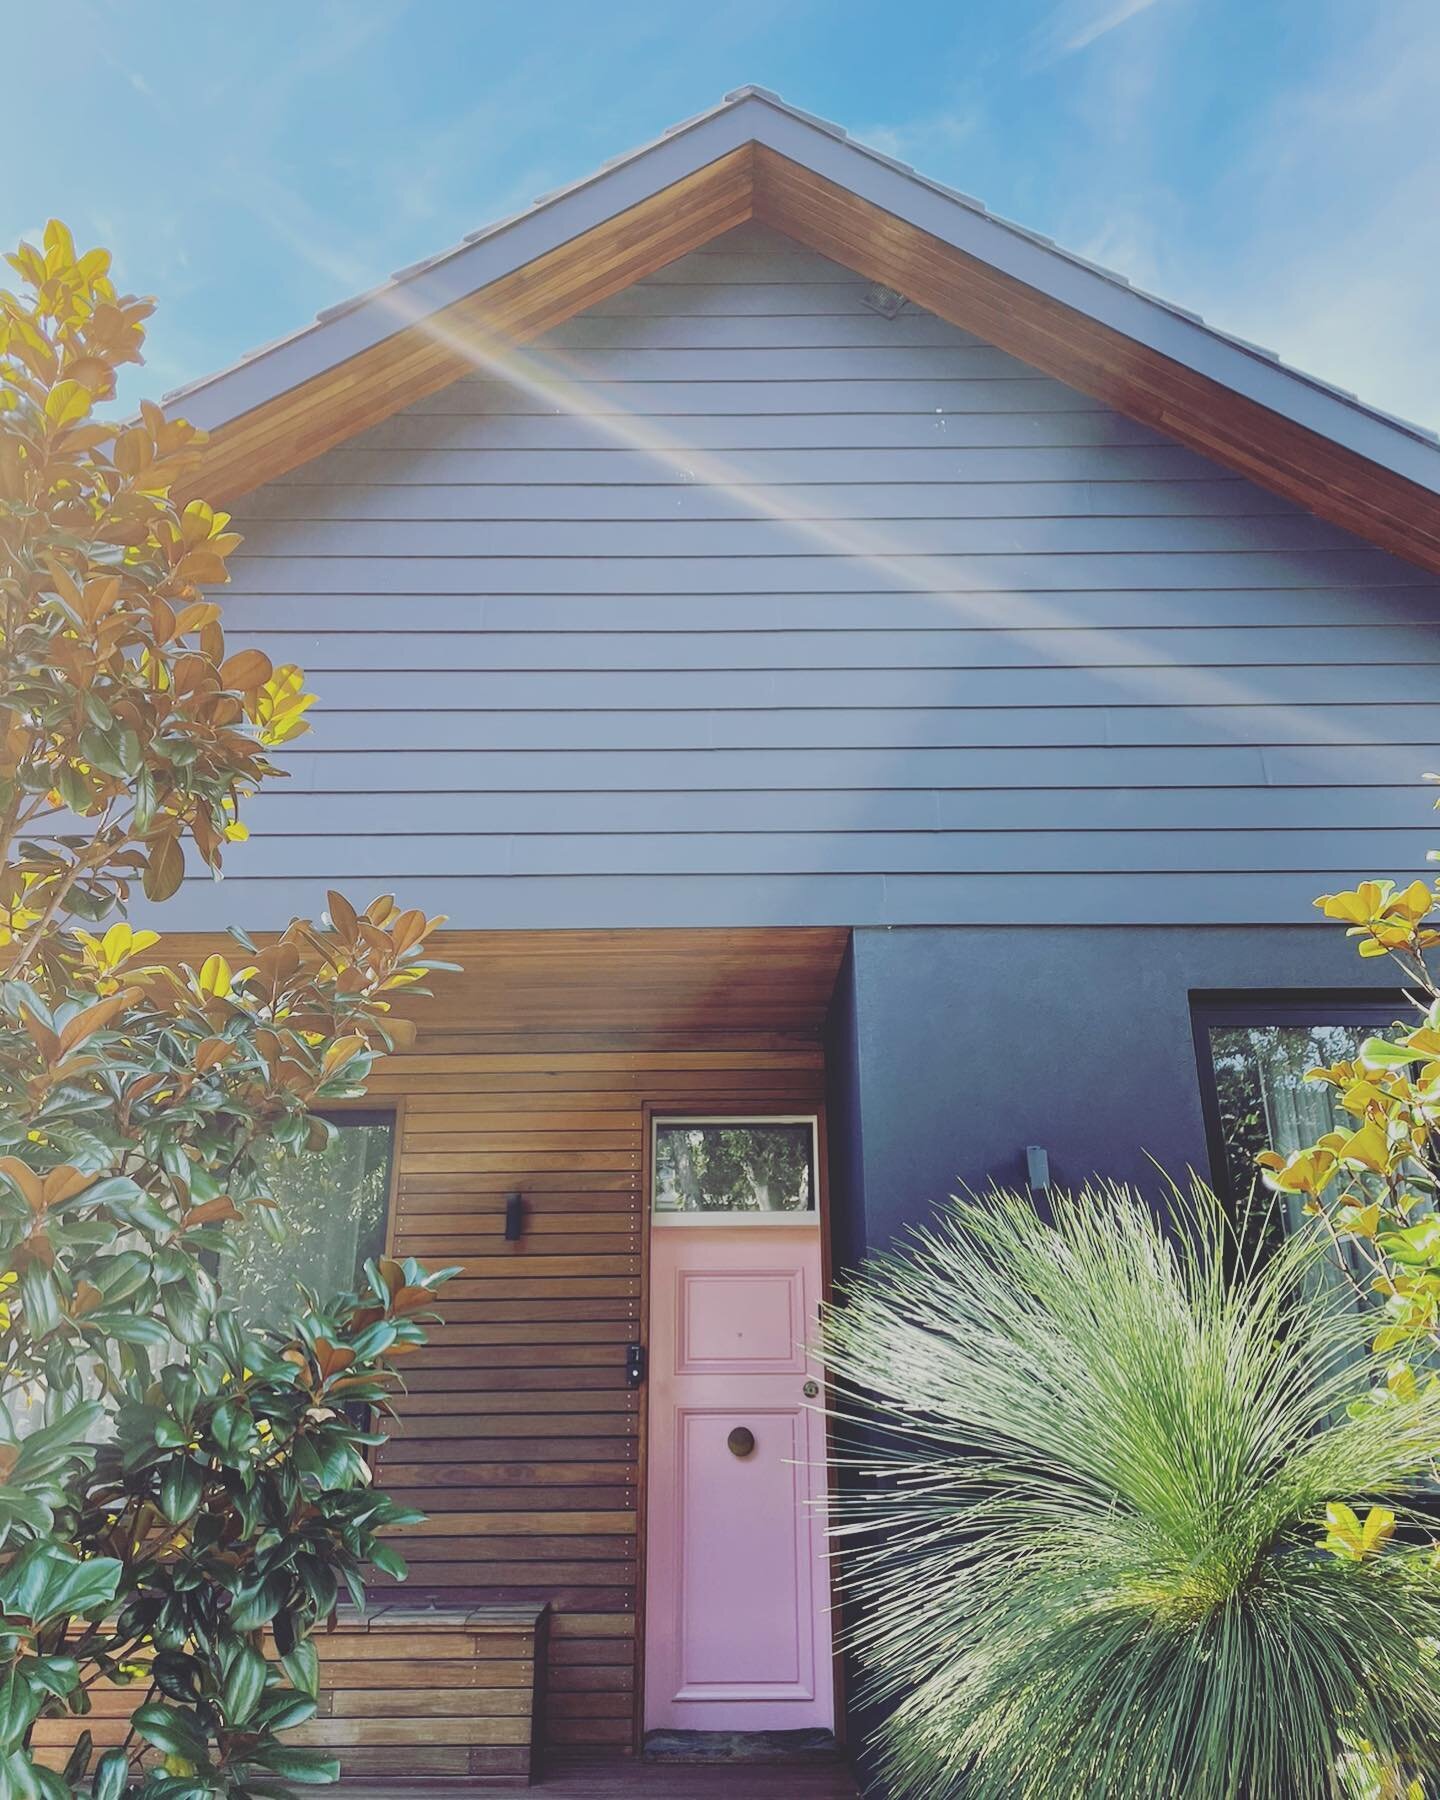 Bondi House - think pink 🧠 #home #house #renovation #build #design #housedesign #homerenovation #pink #facade #bondi #bondibeach #interiors #garden #gardensofinstagram #gardendesign #sydney #australia